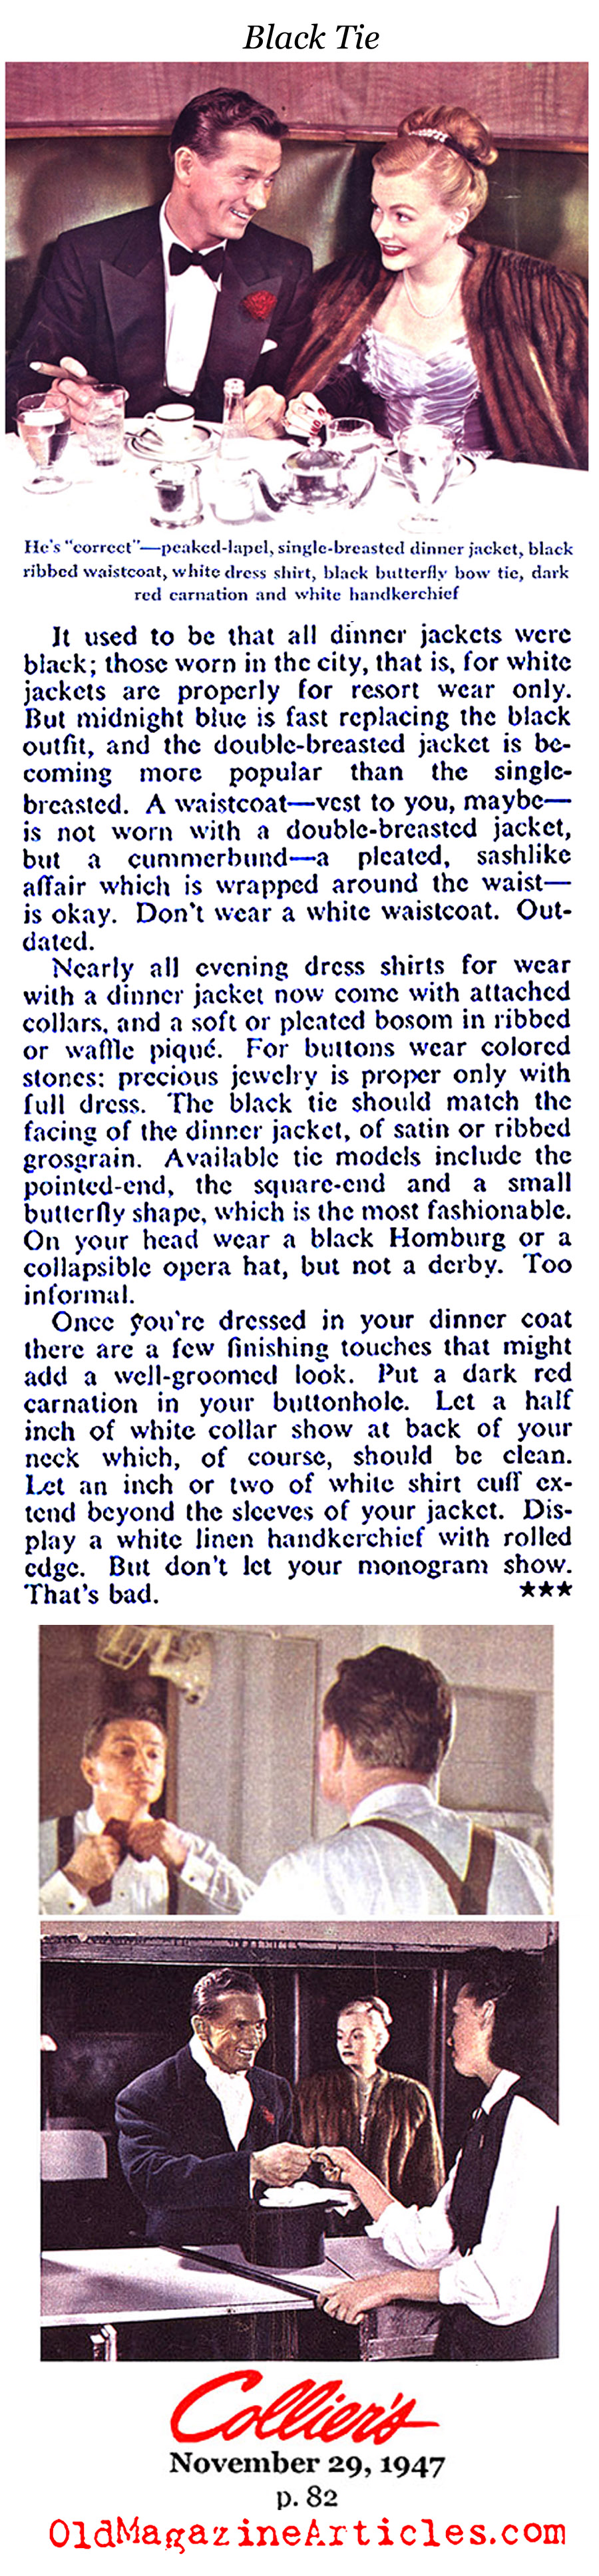 Black Tie, Please (Collier's Magazine, 1947)